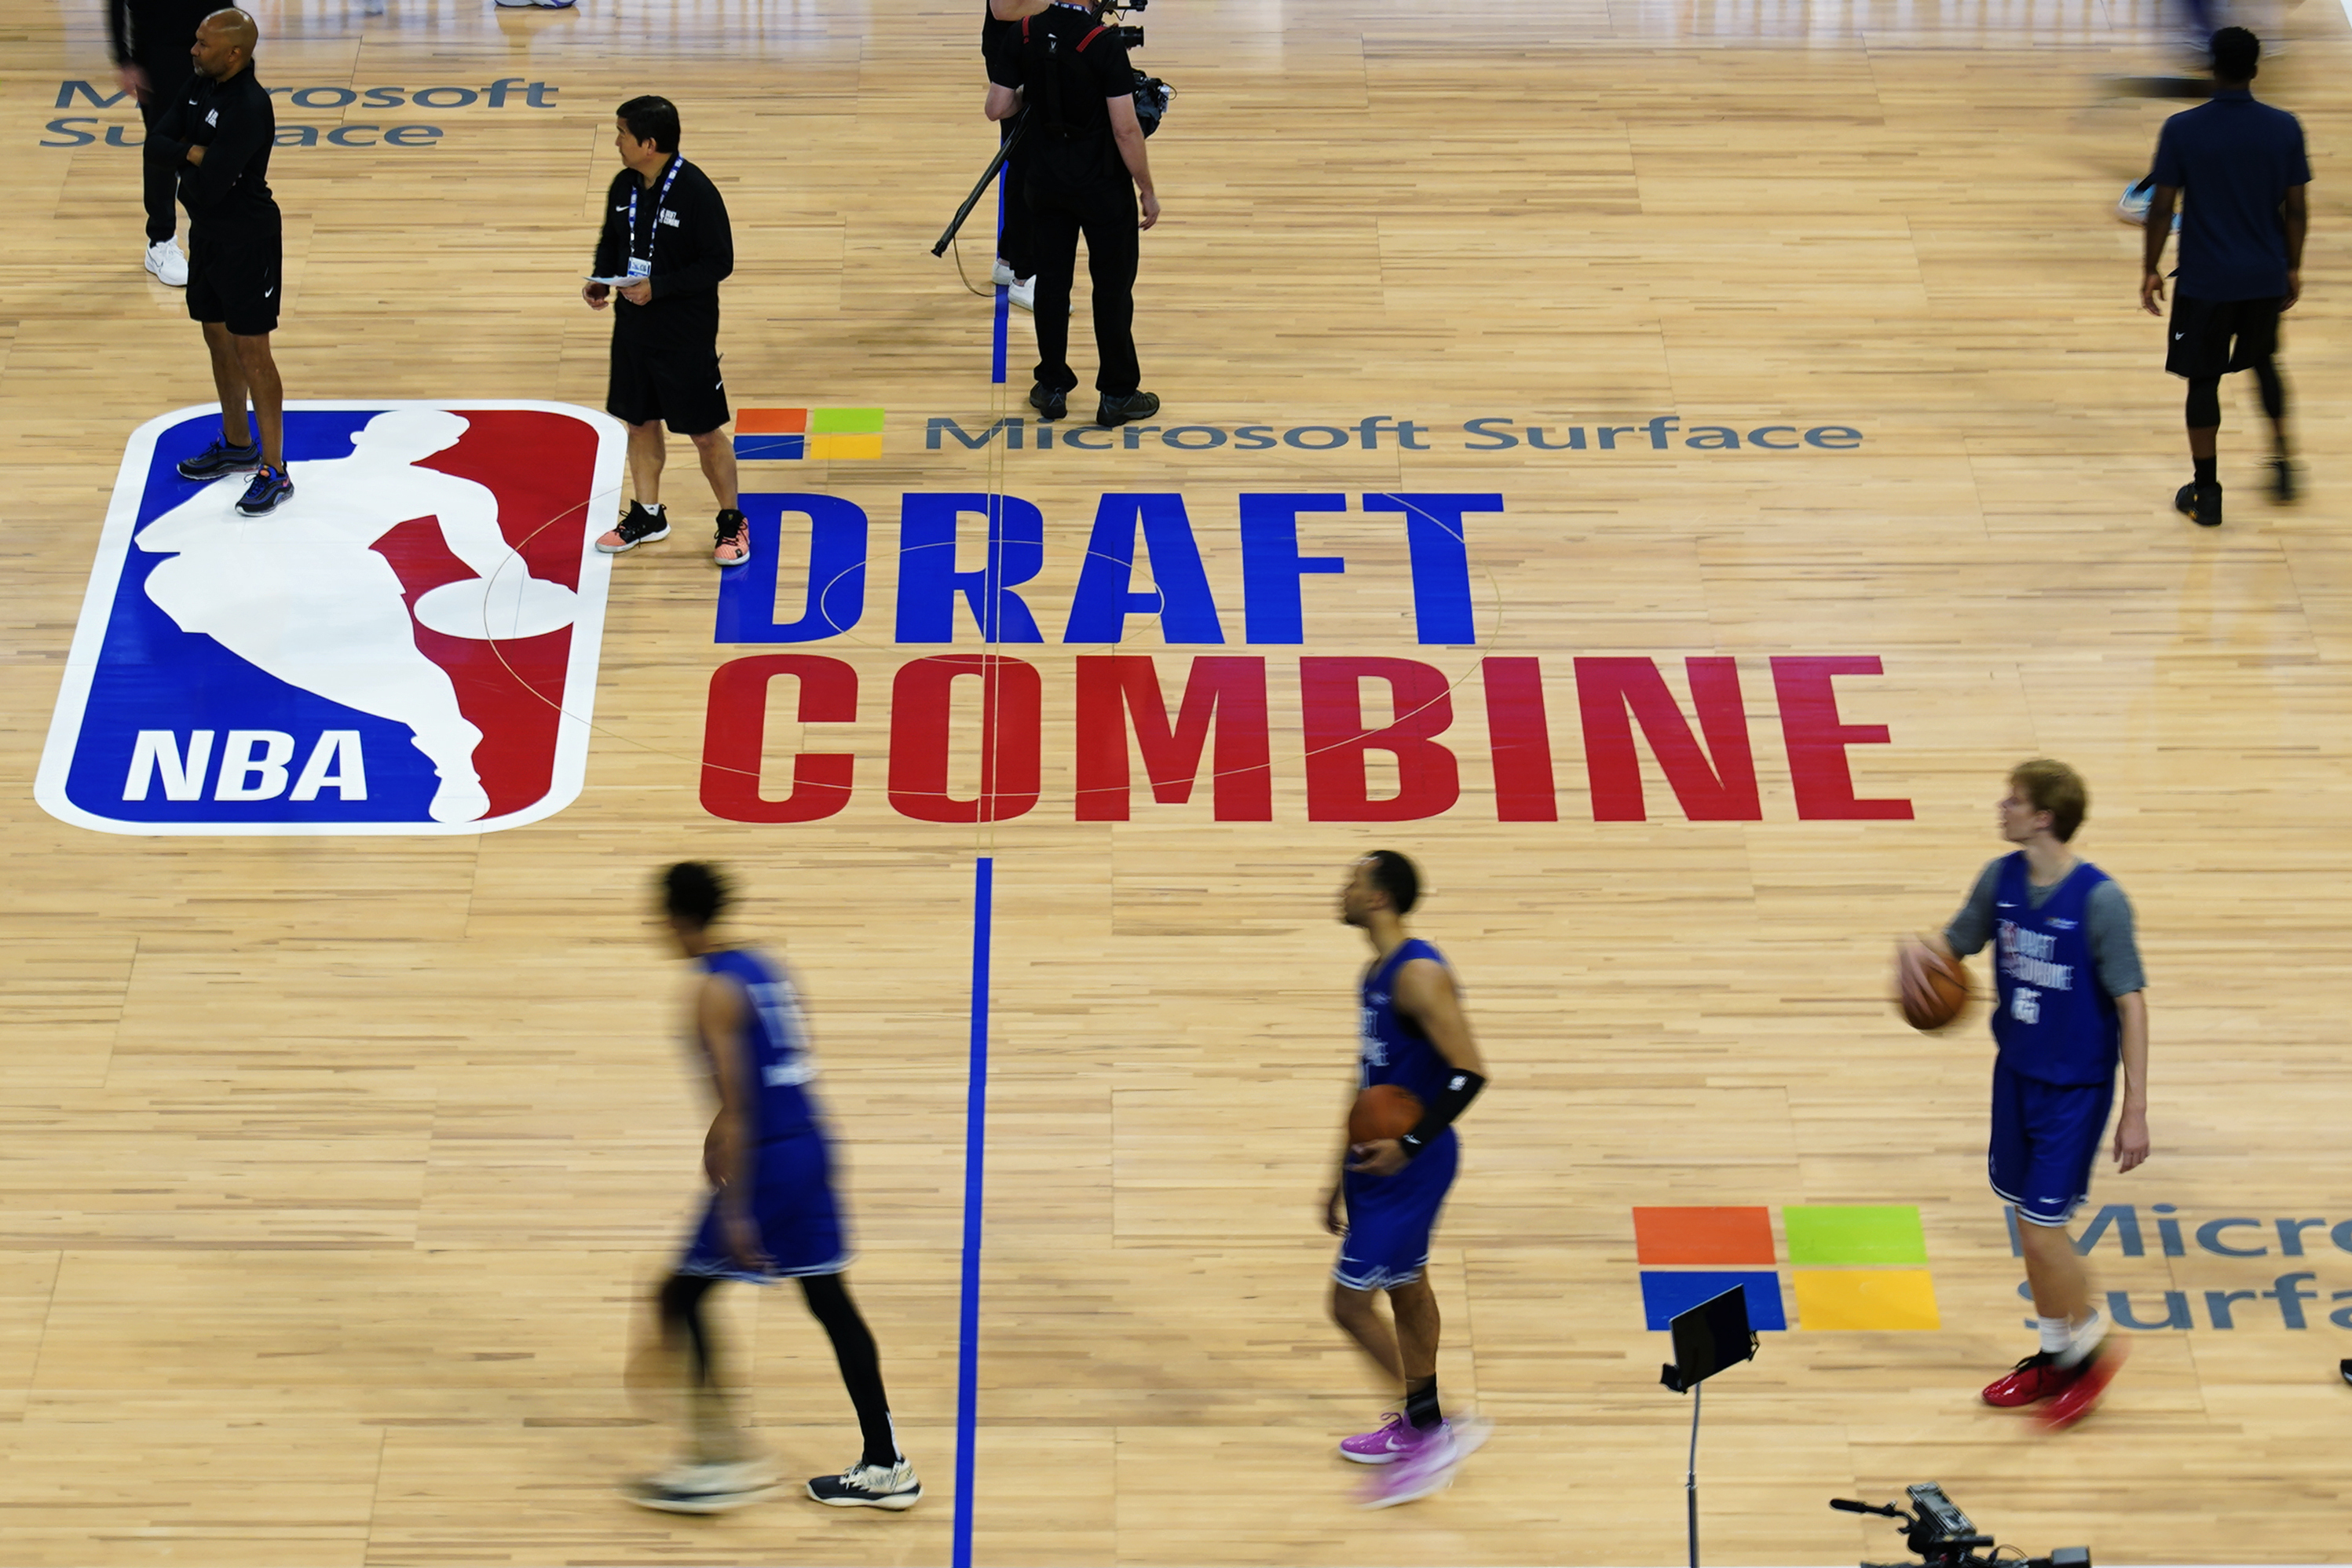 Inside the 2017 NBA Draft Combine